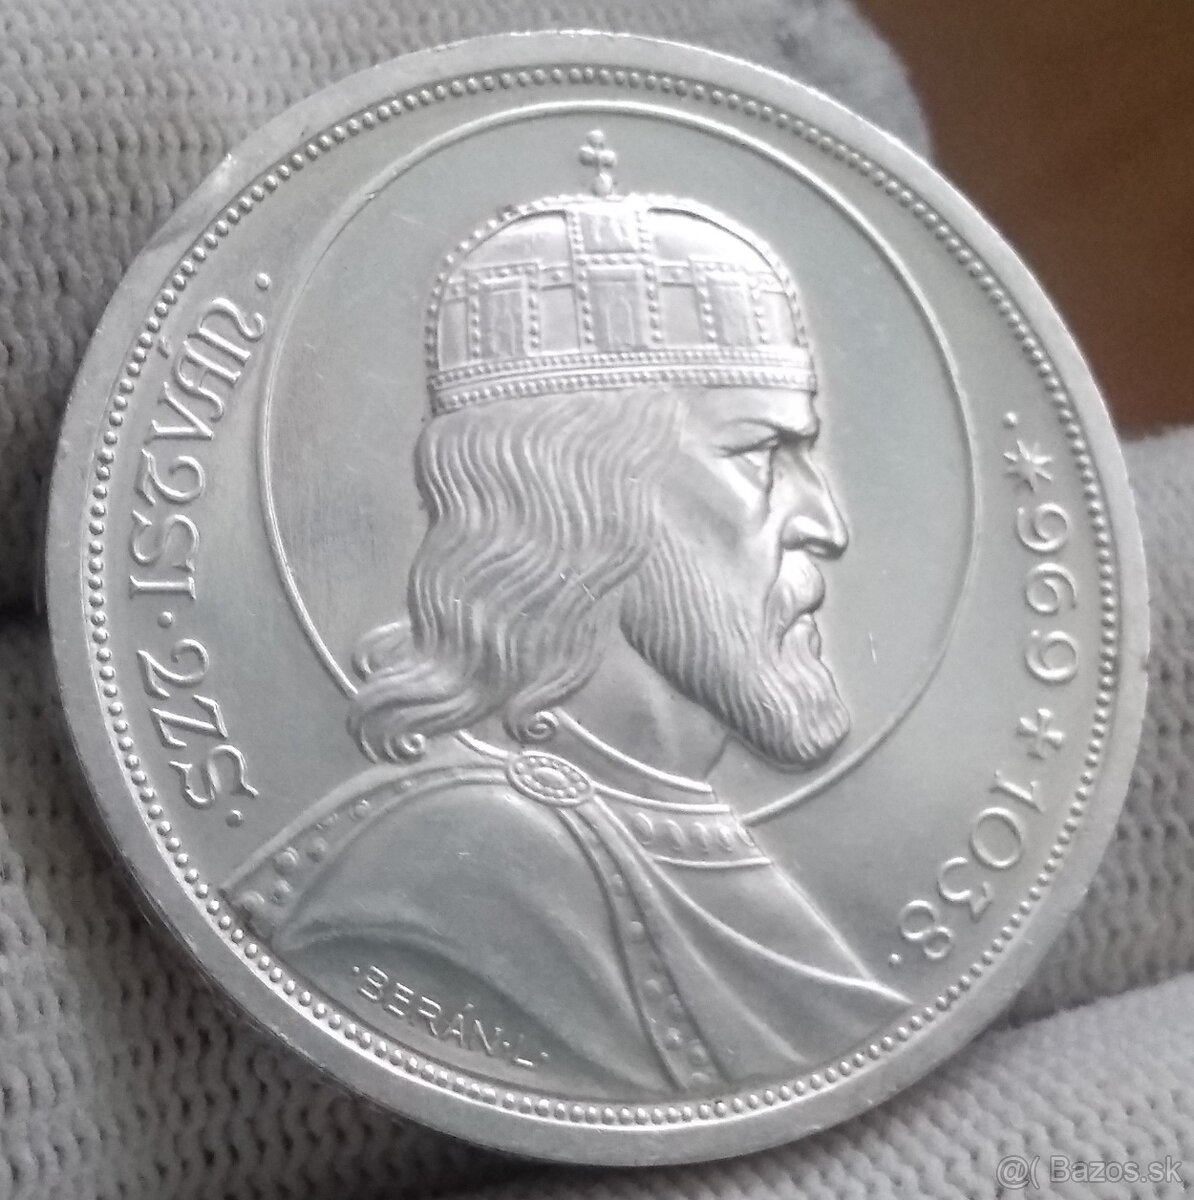 Strieborné mince Maďarska.